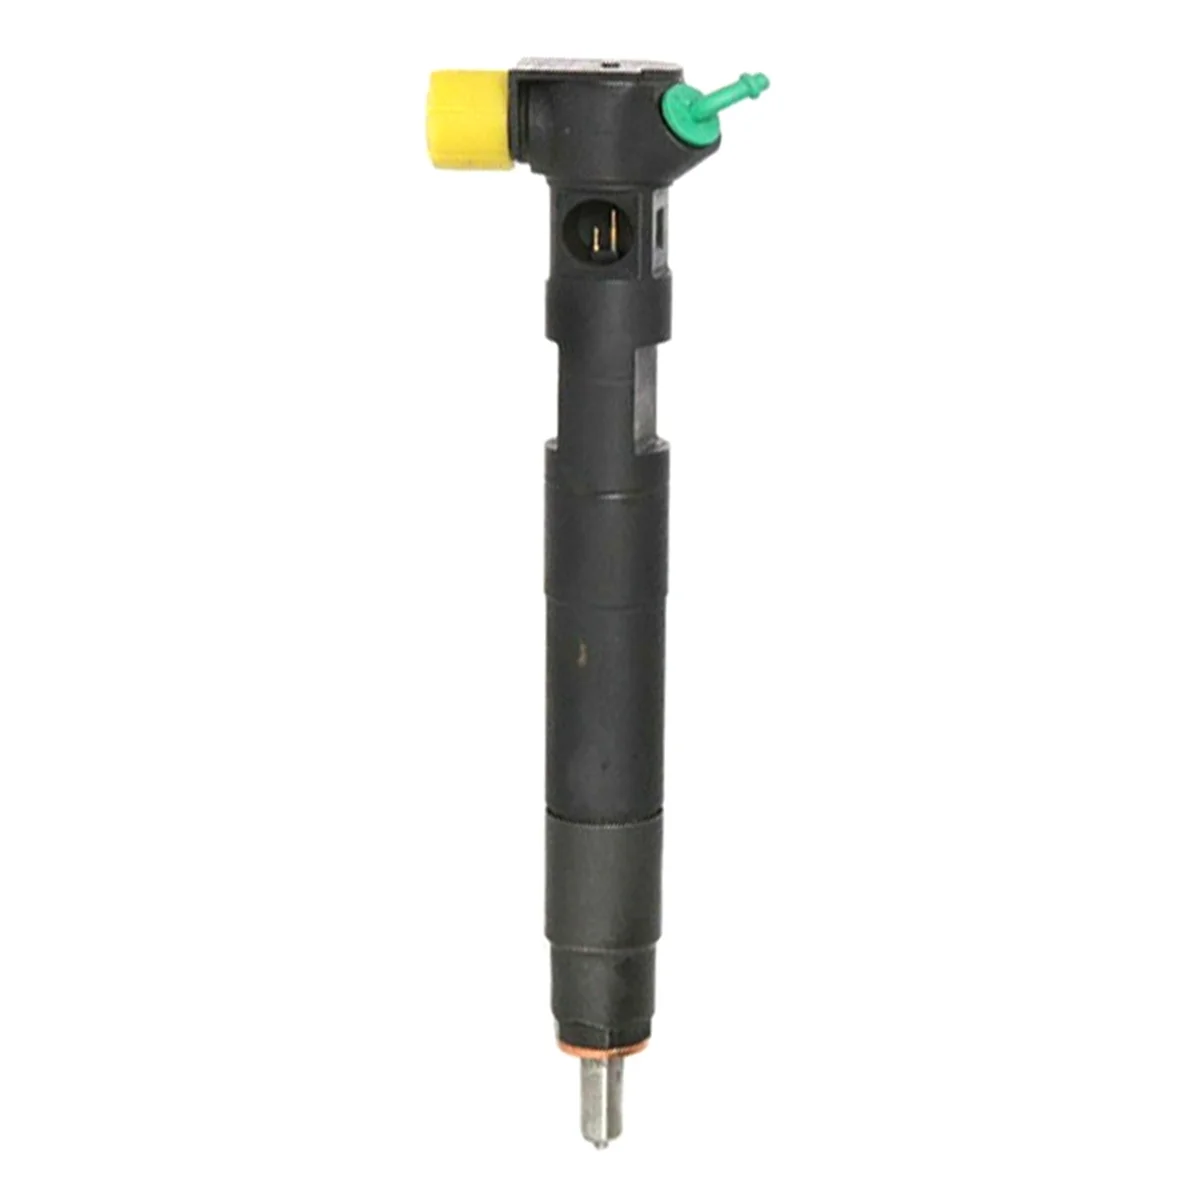 

New Diesel Fuel Injector Nozzle for Delphi Hyundai Grand Starex H1 KIA BONGO 2.5 CRDI WGT 28229873 33800-4A710